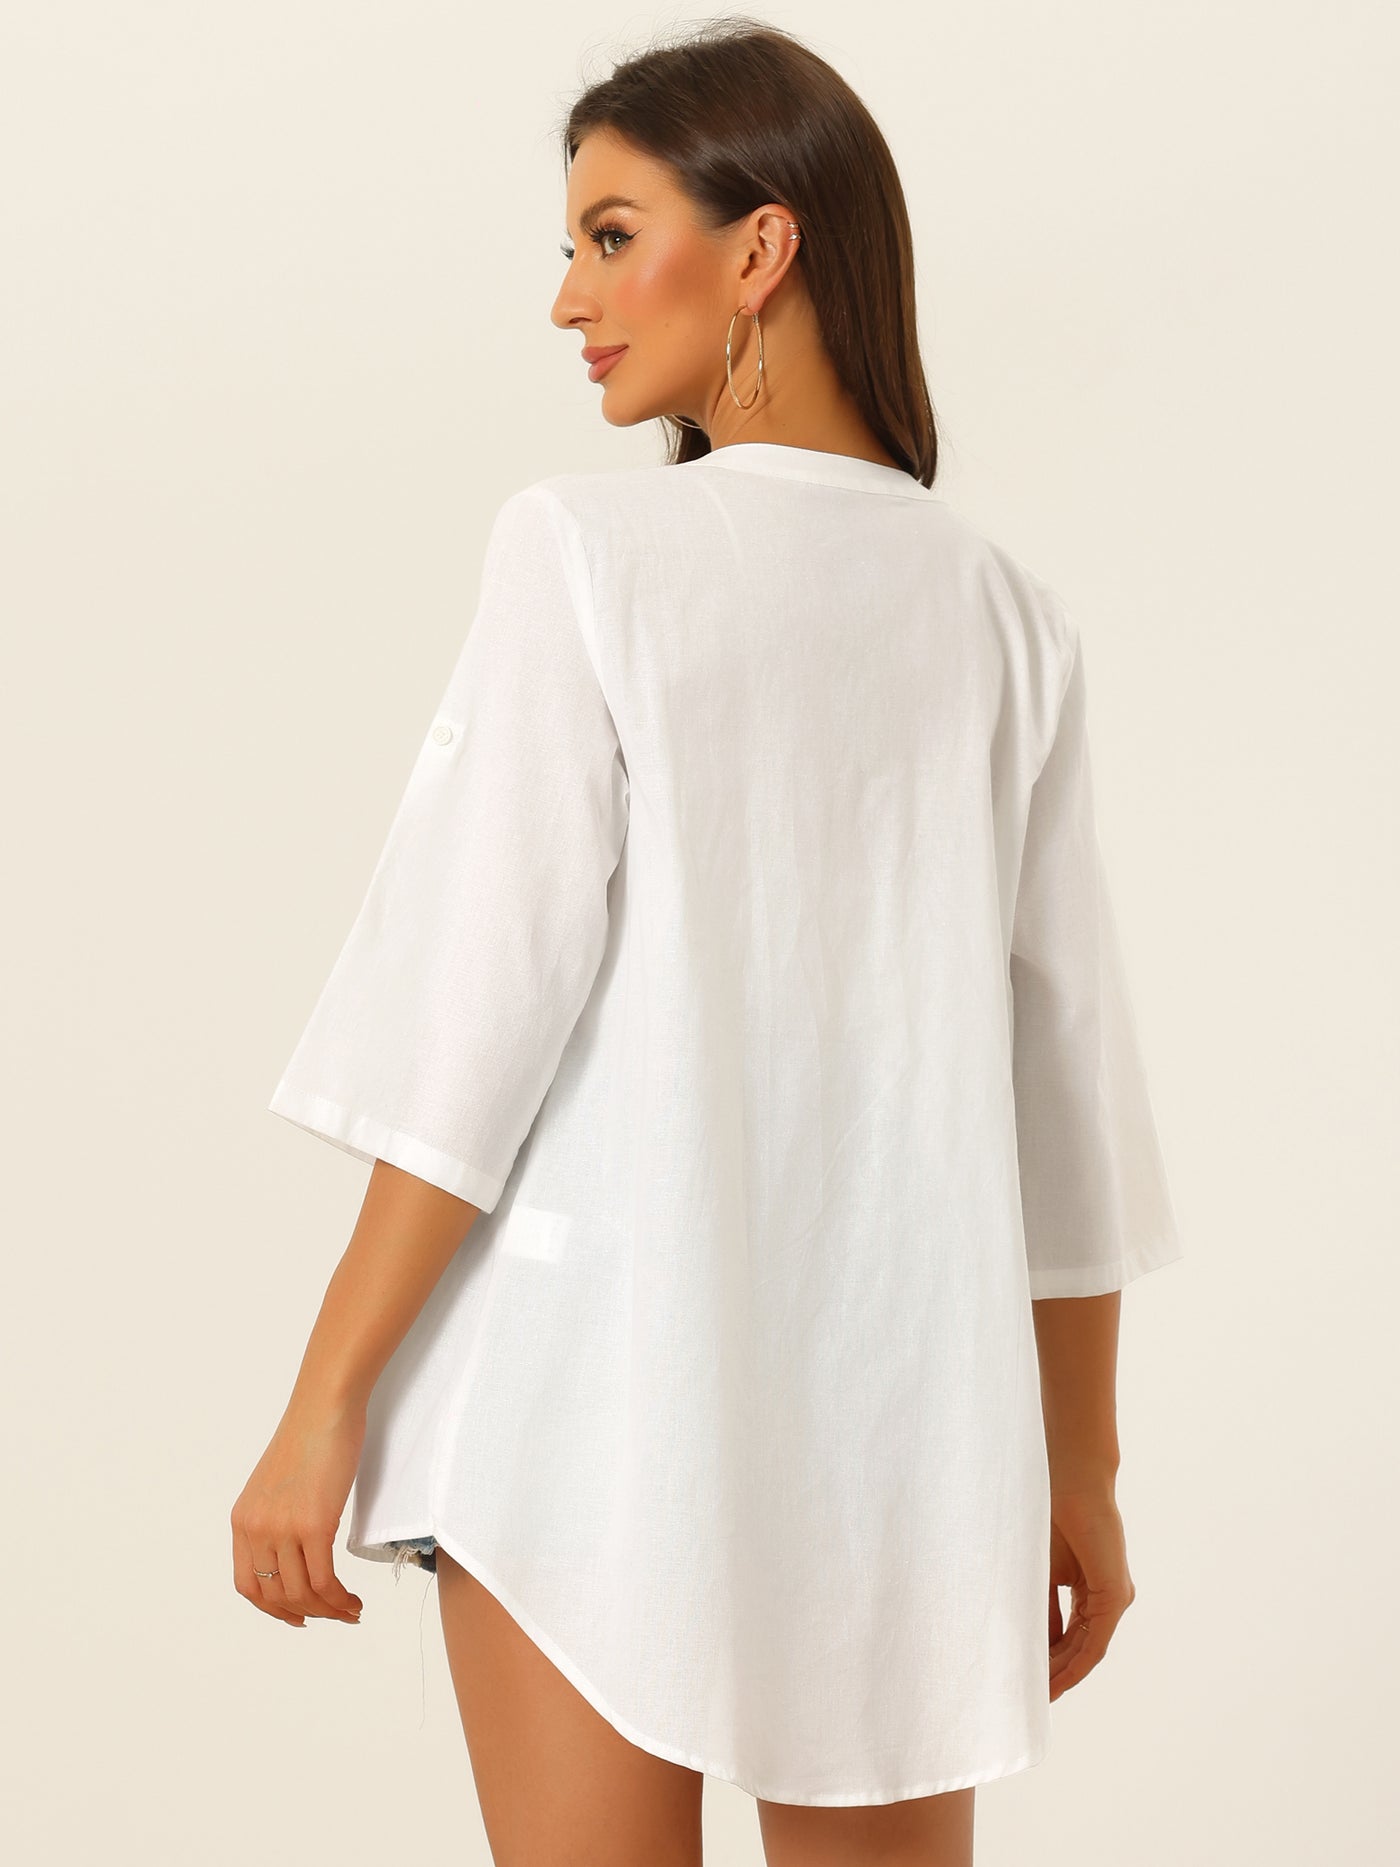 Allegra K Button Down Linen Shirt for Women's V Neck Roll Up Sleeve Summer Casual Cotton Blouse